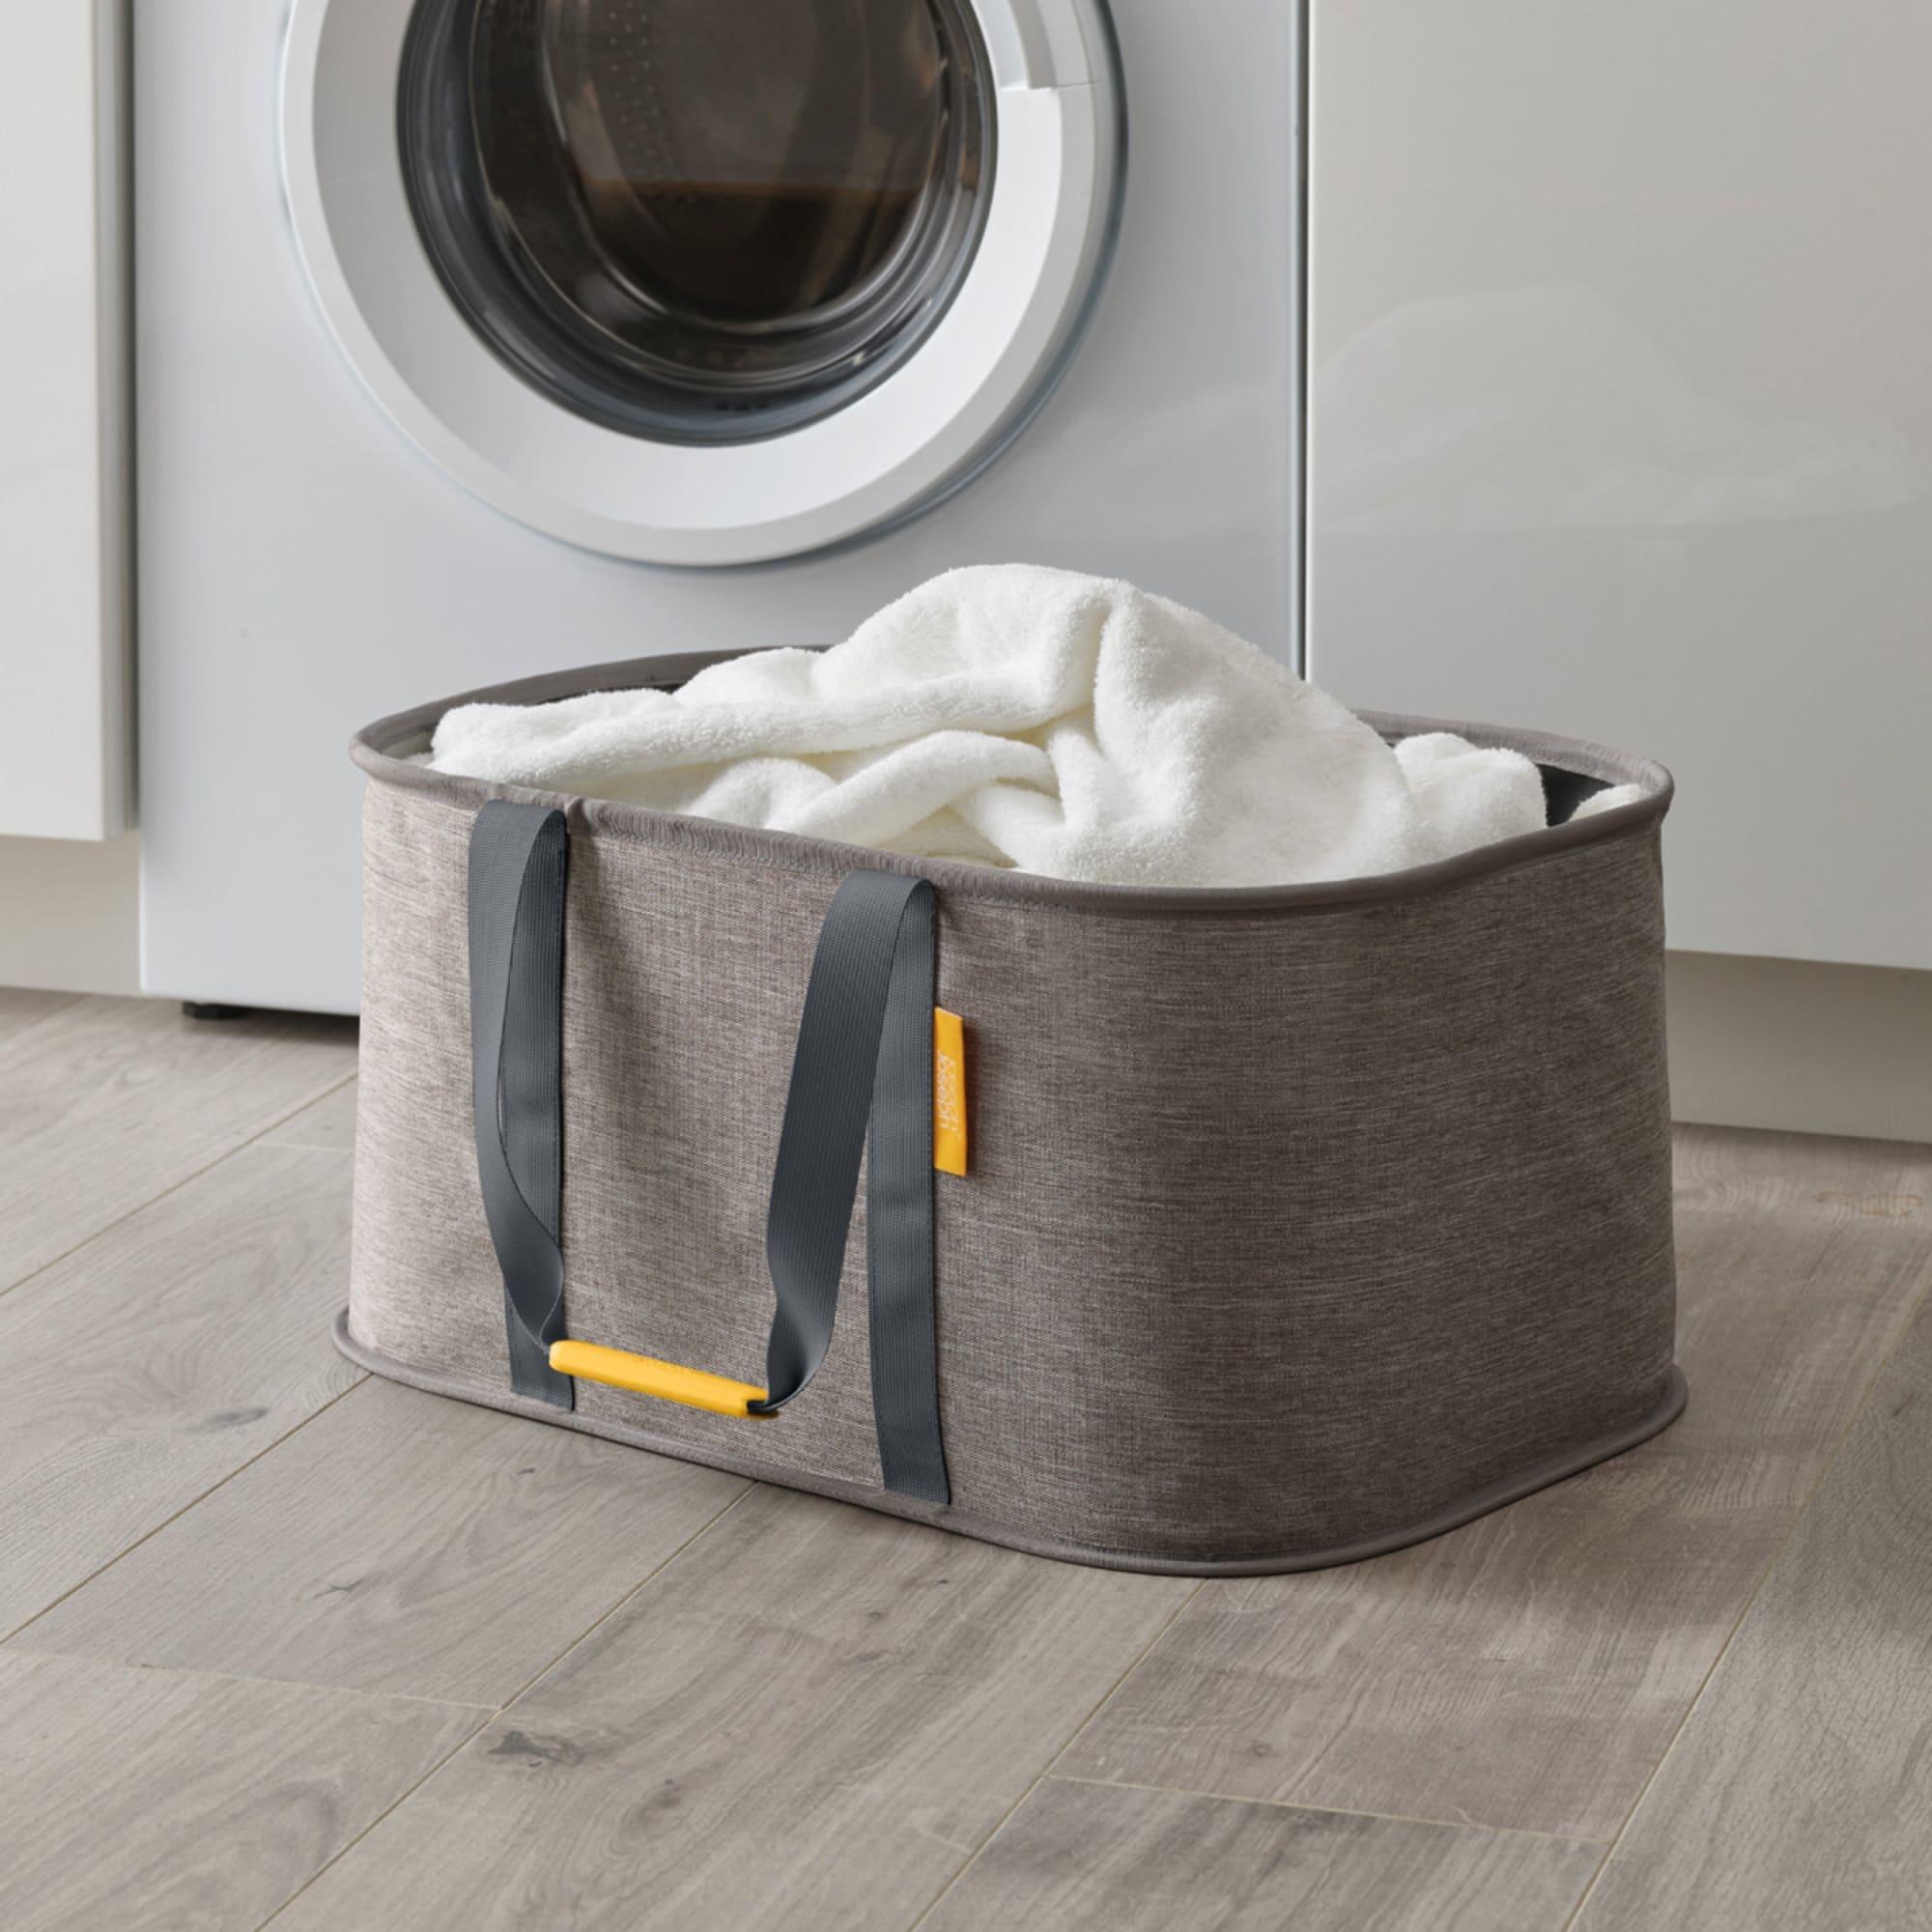 Joseph Joseph Hold-All Collapsible Laundry Basket 35L Grey Image 11